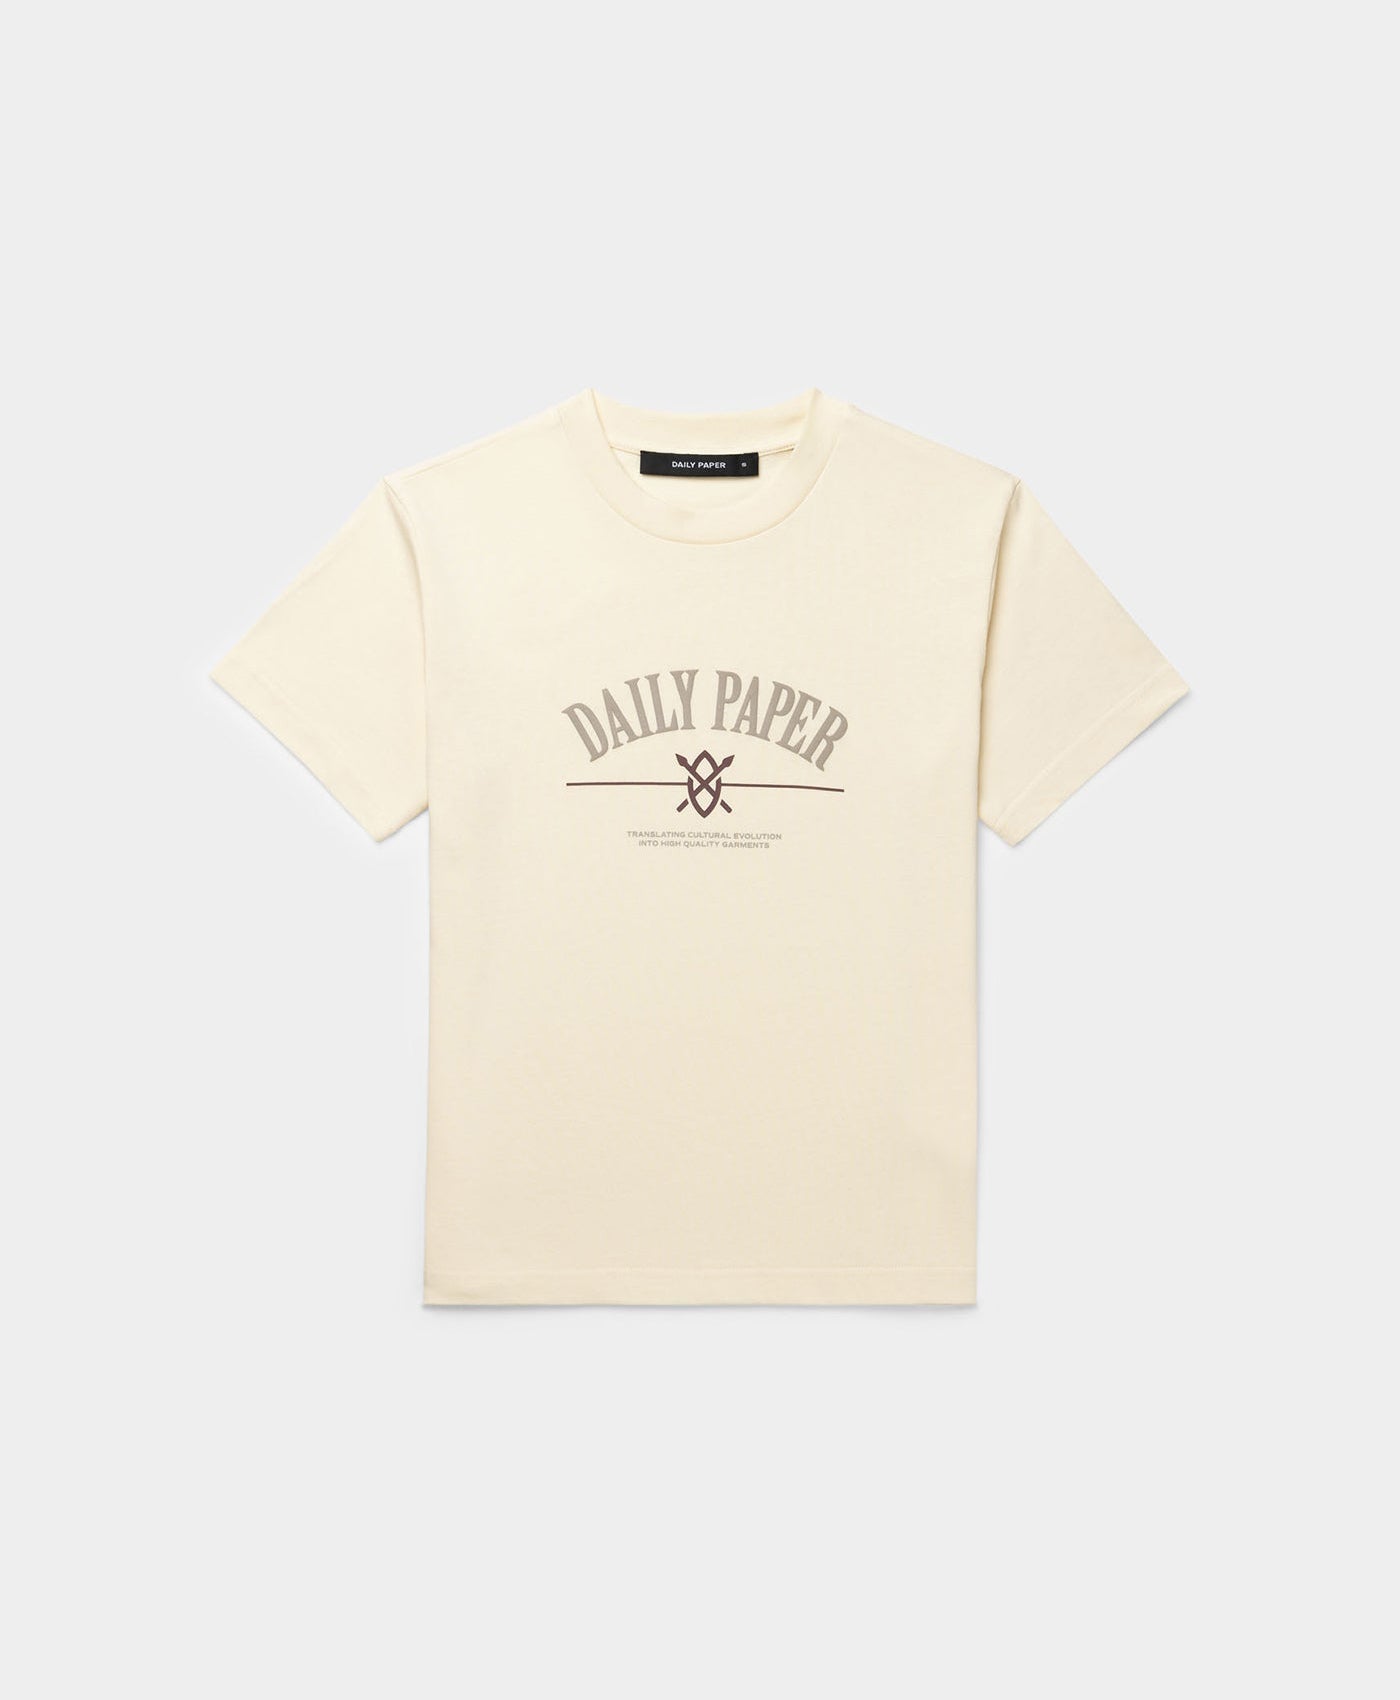 DP - Shortbread Cream Nolitah T-Shirt - Packshot - Front